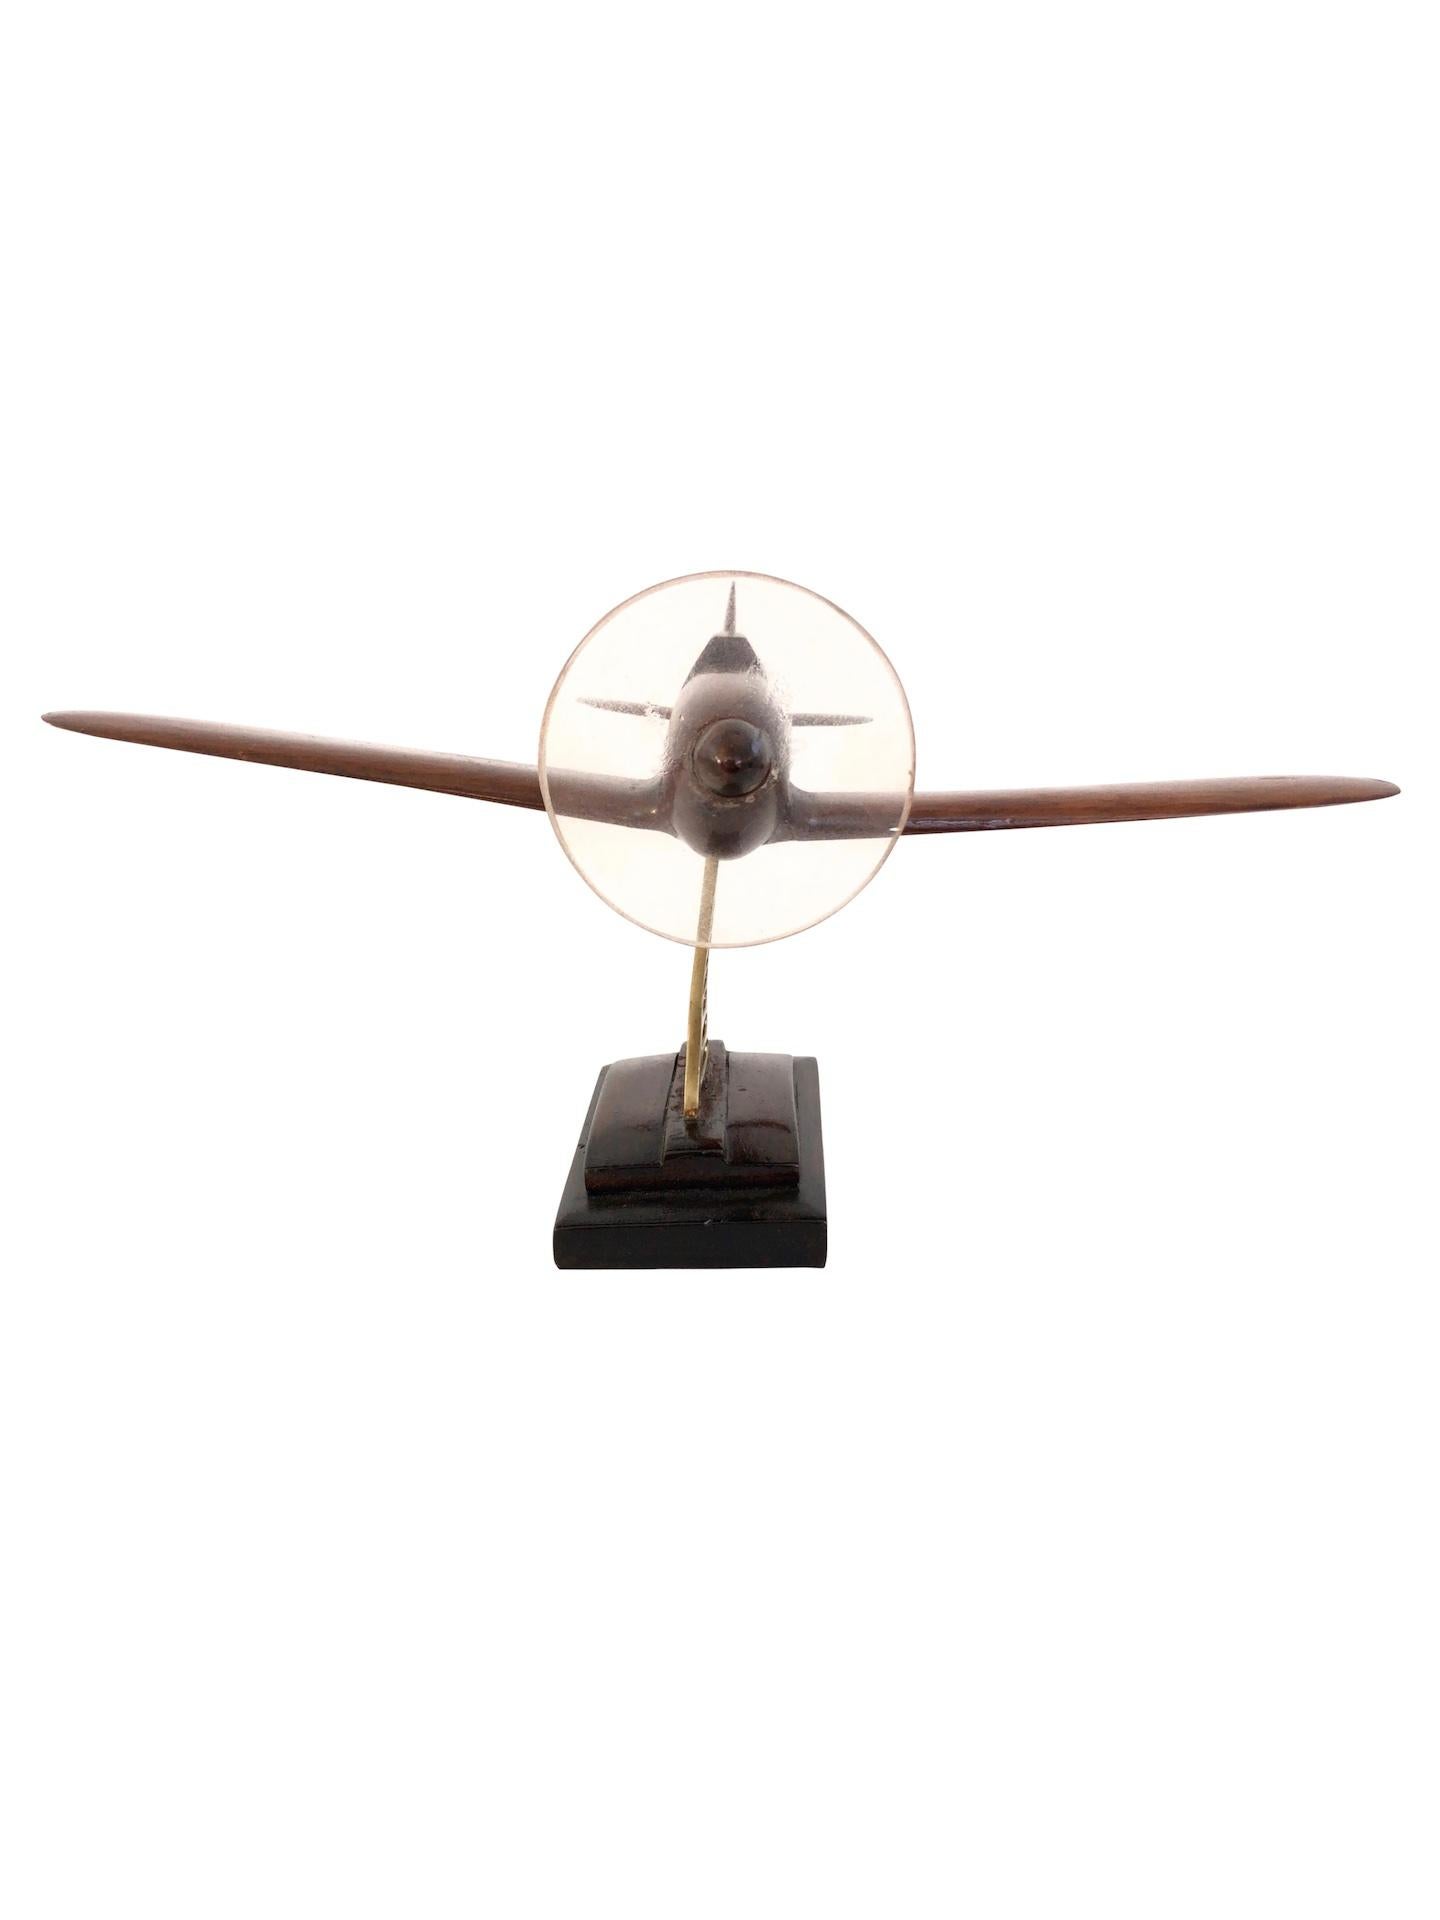 Air plane desk Model in brown wood, 
Original Art Deco 
France, 1930s

Dimensions:
Width 39 cm
Height 20 cm
Depth 29 cm.